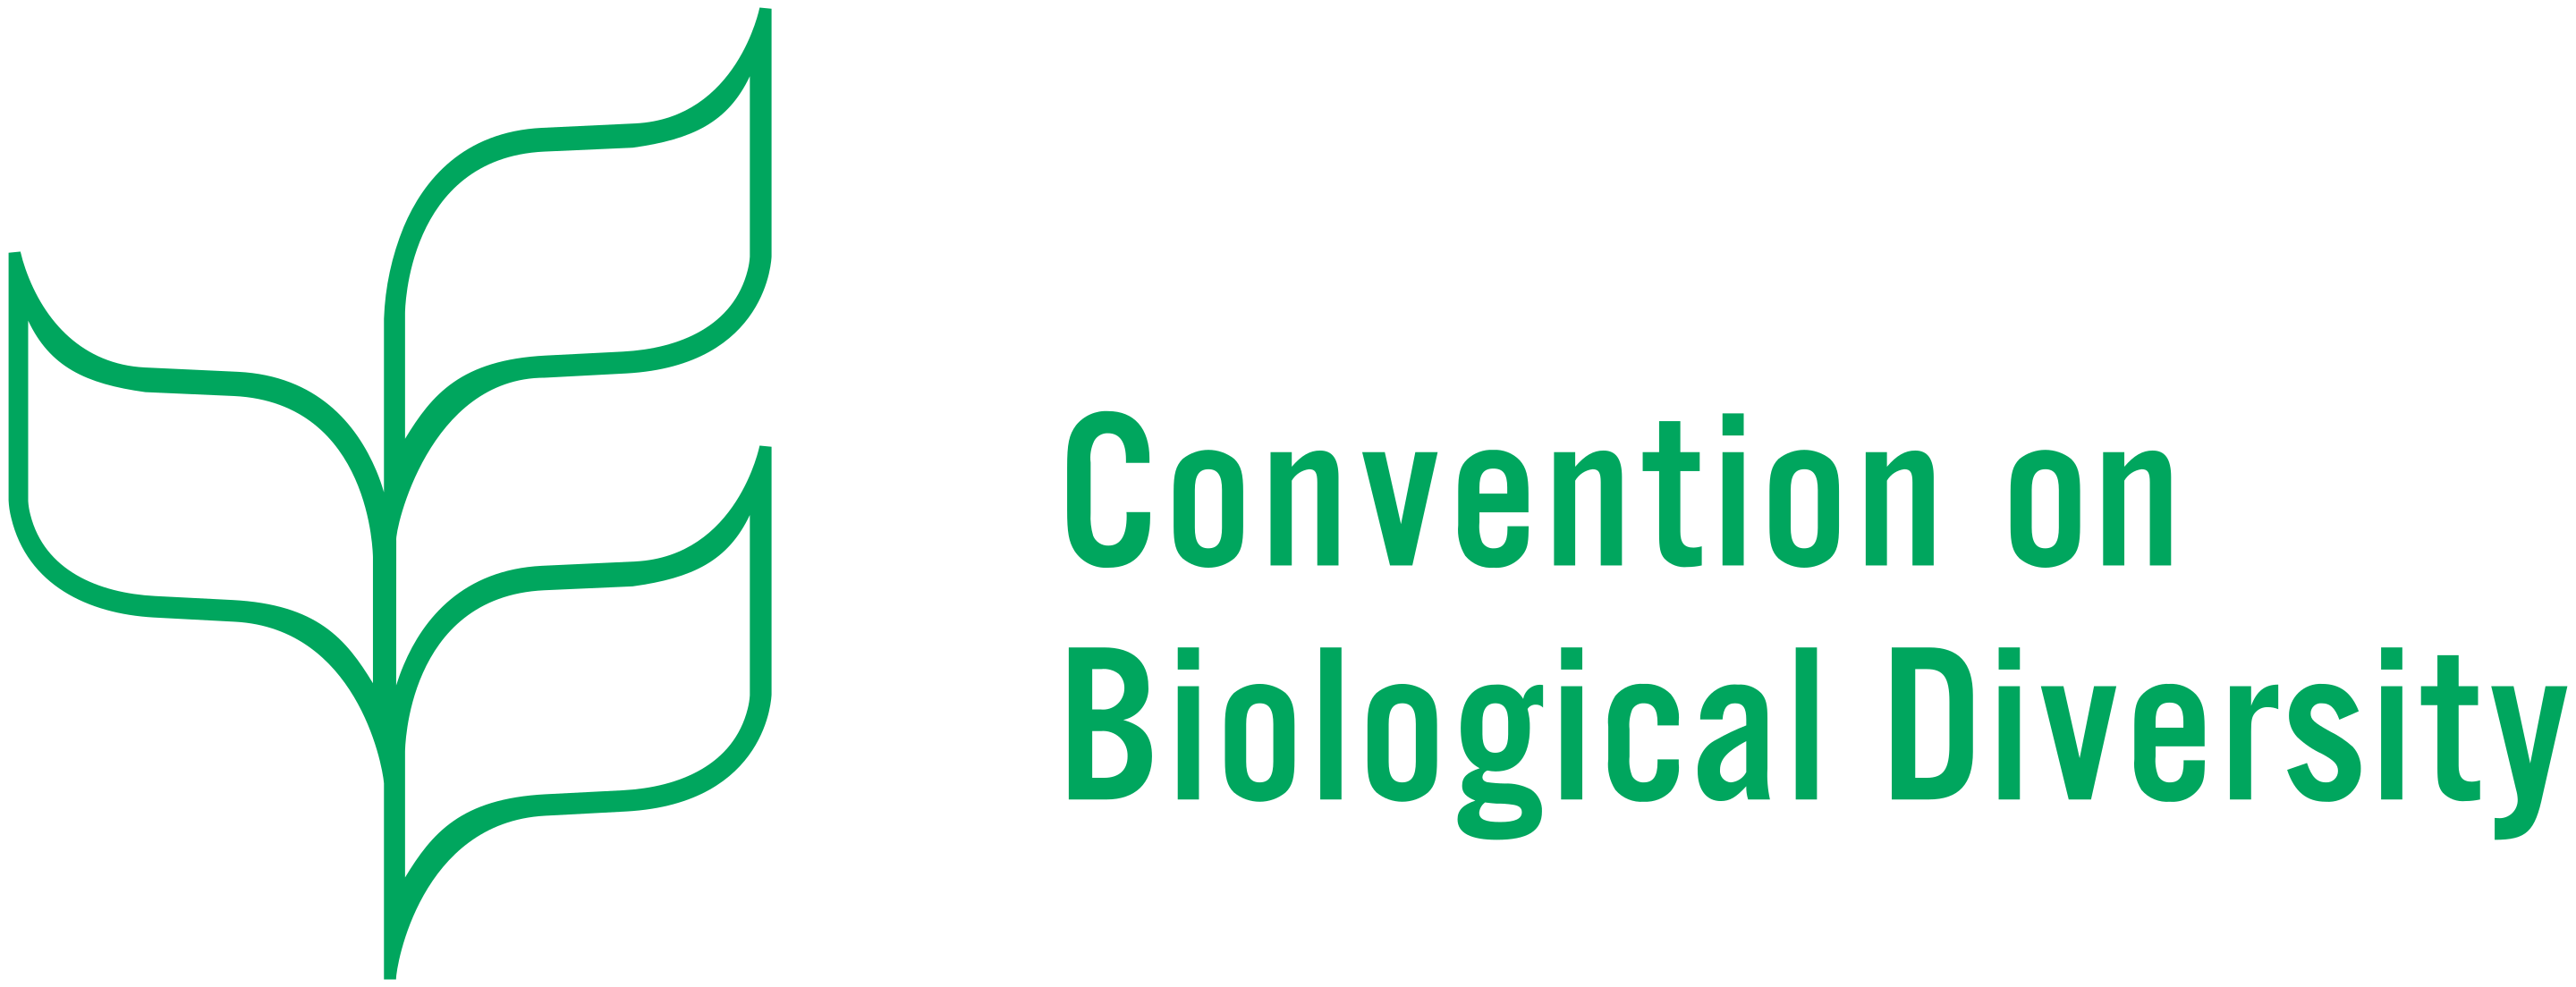 Convention on Biological Diversity logo